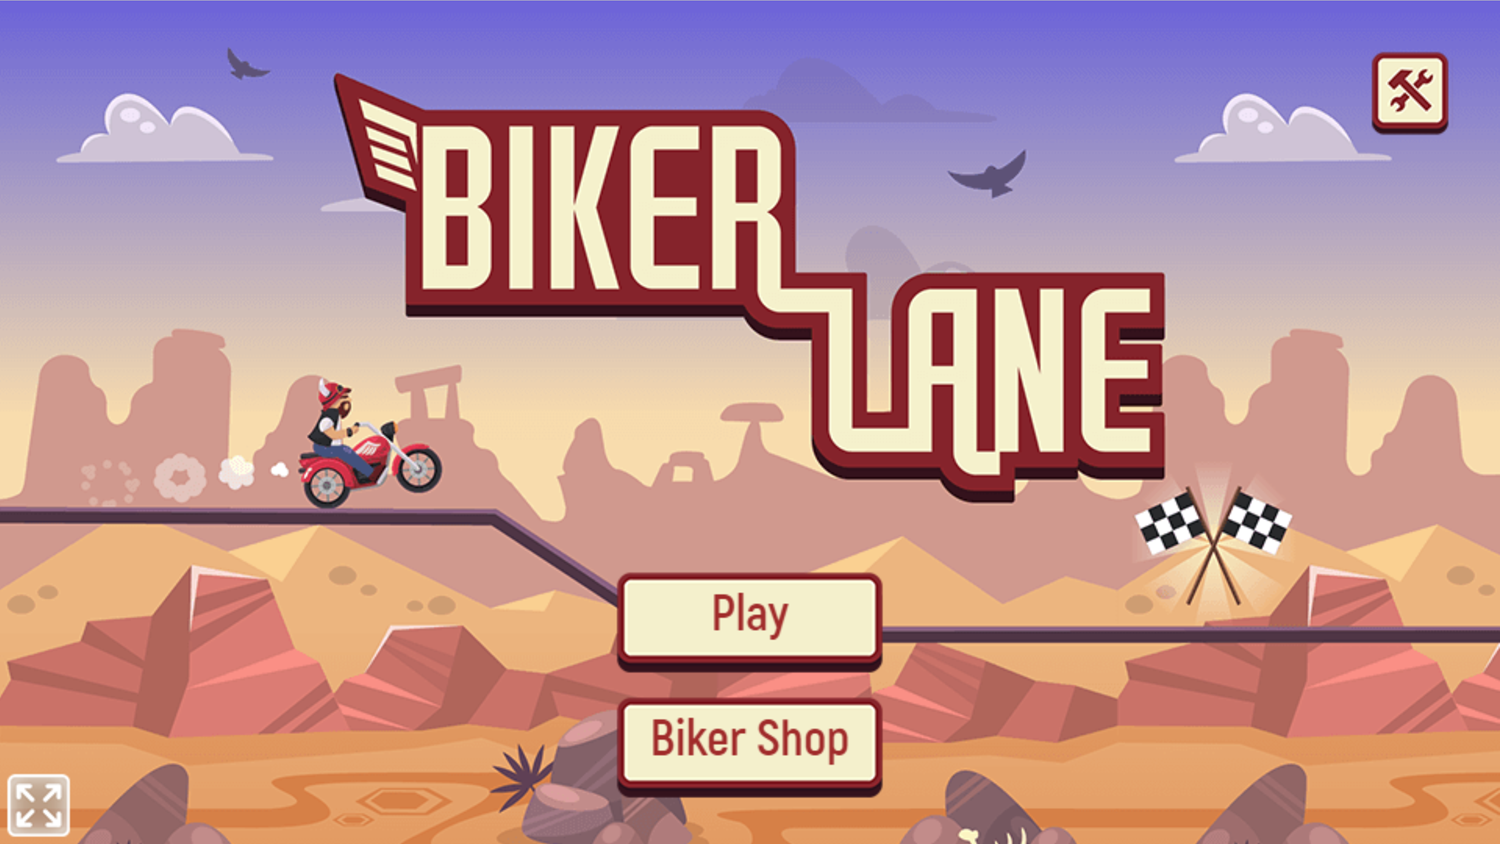 Biker Lane Game Welcome Screen Screenshot.